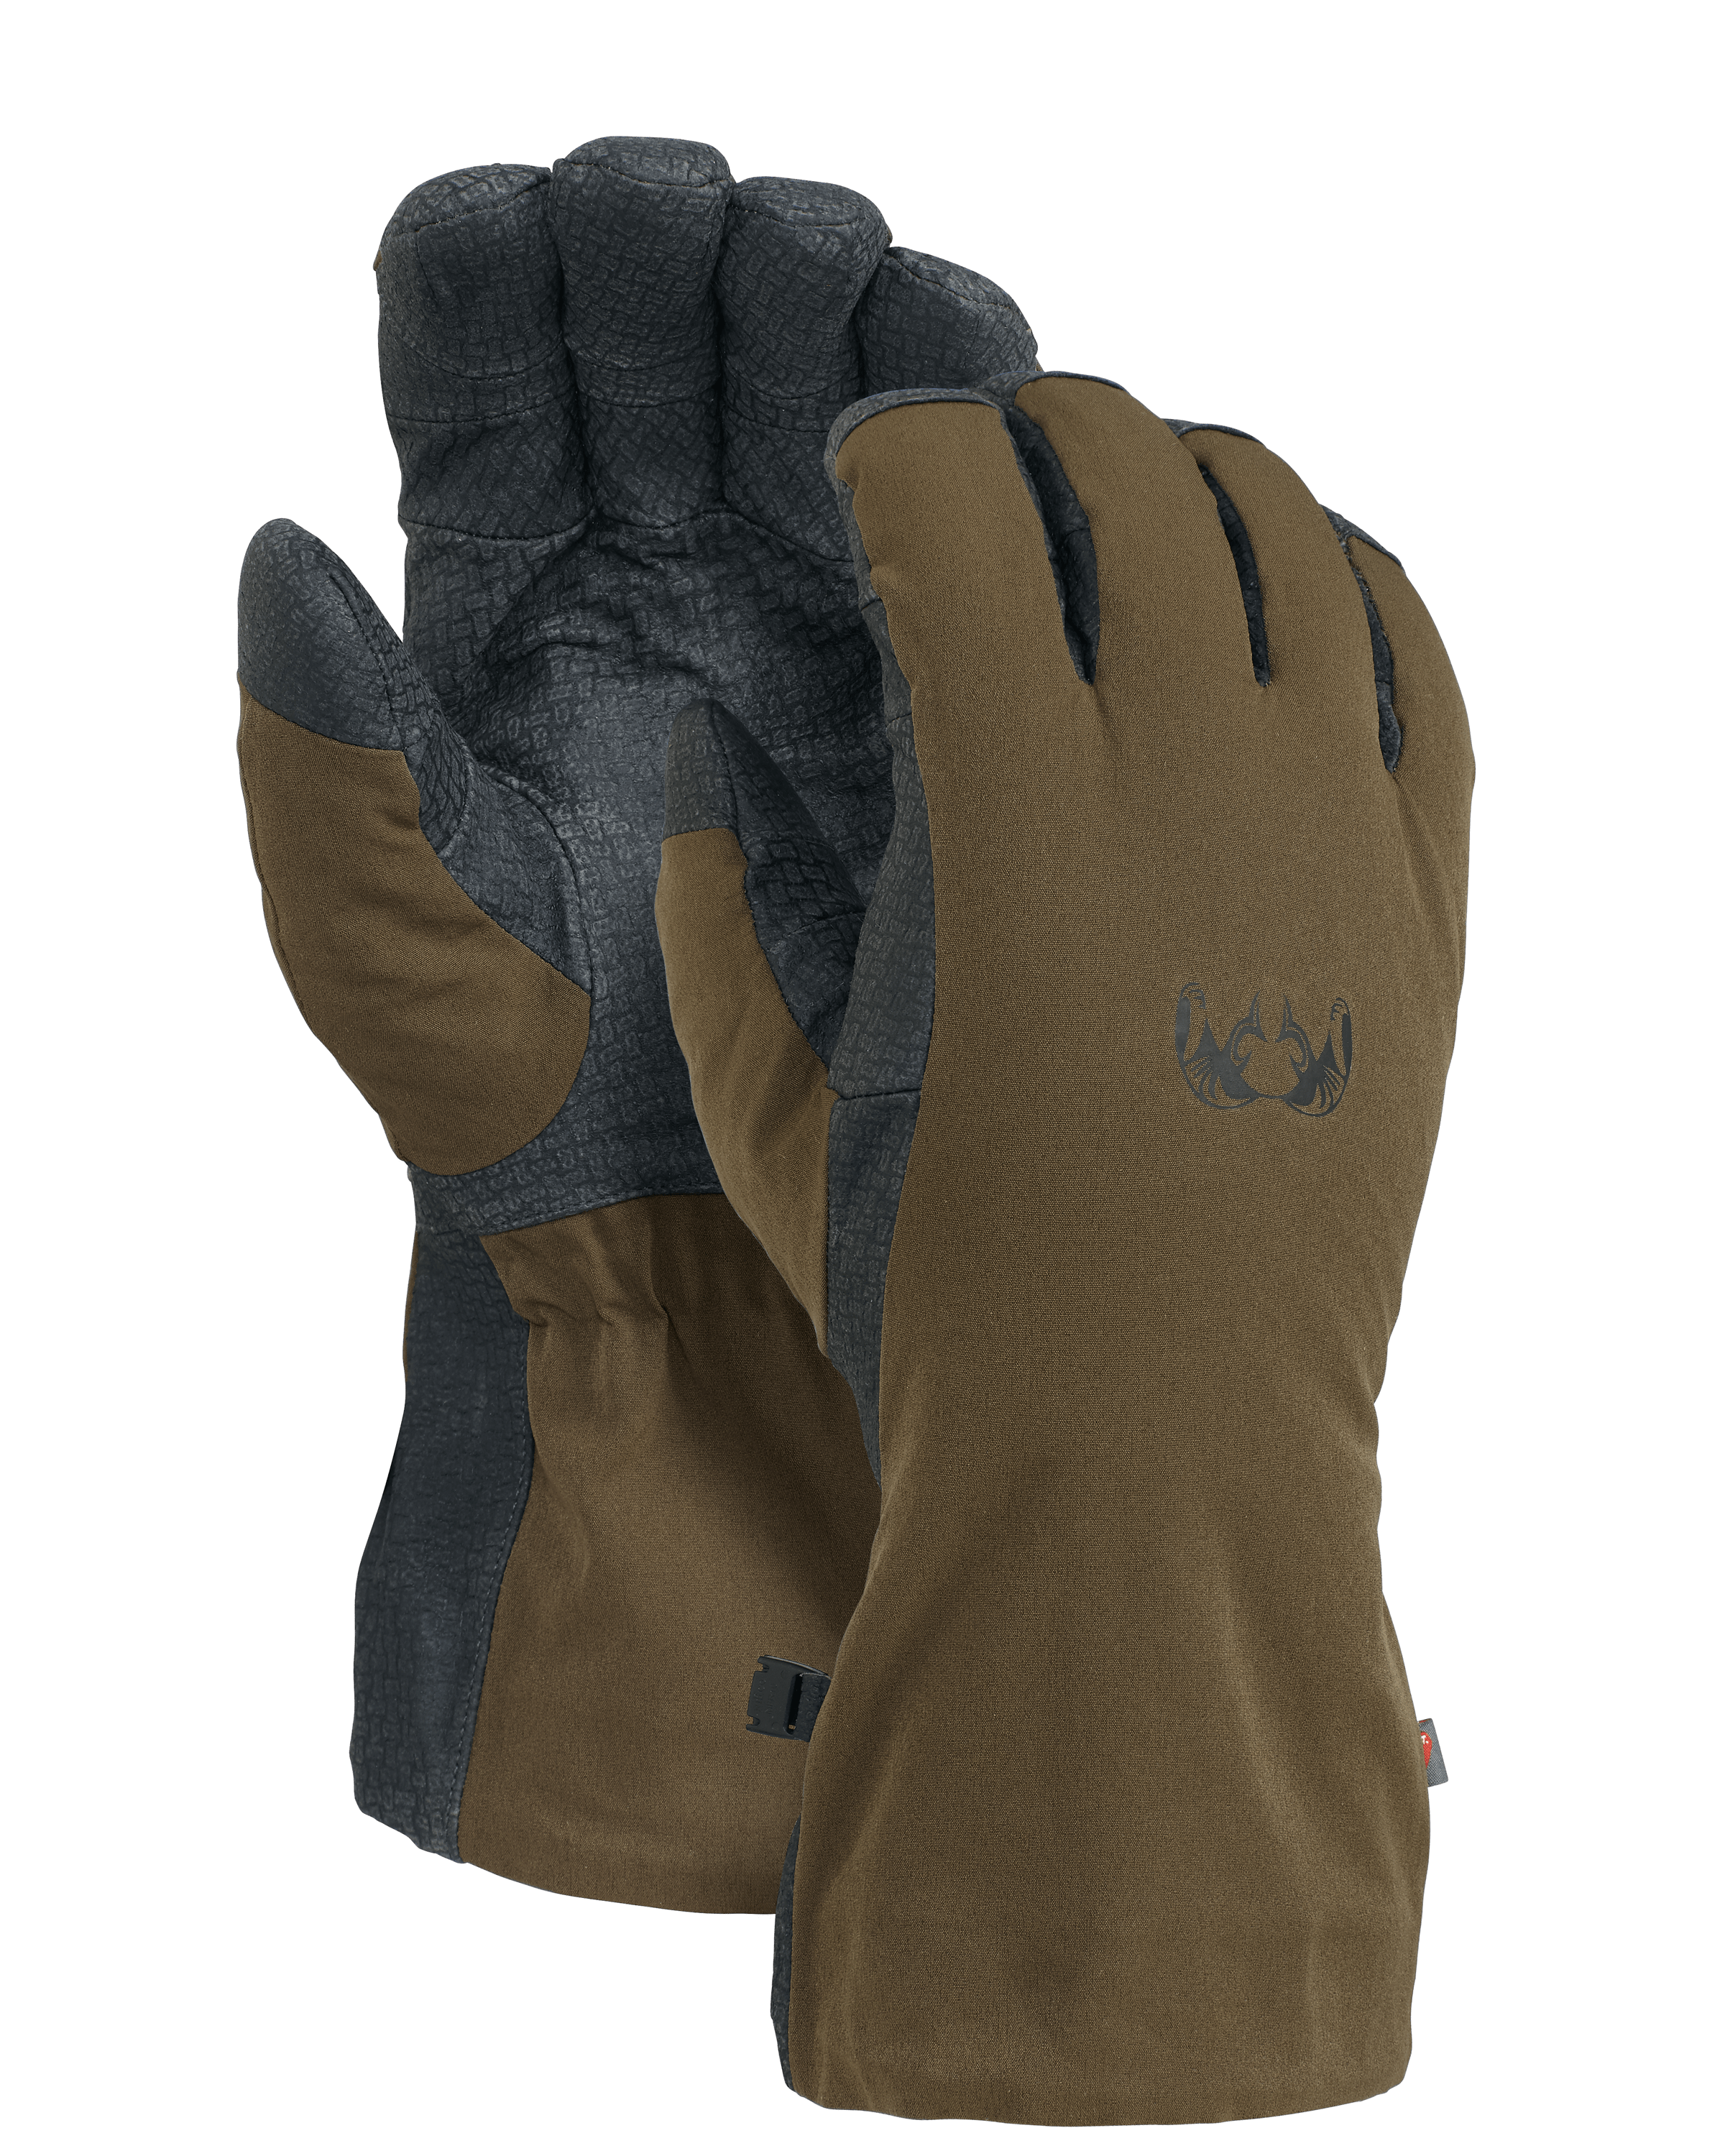 KUIU Northstar Hunting Glove in Bourbon | Large